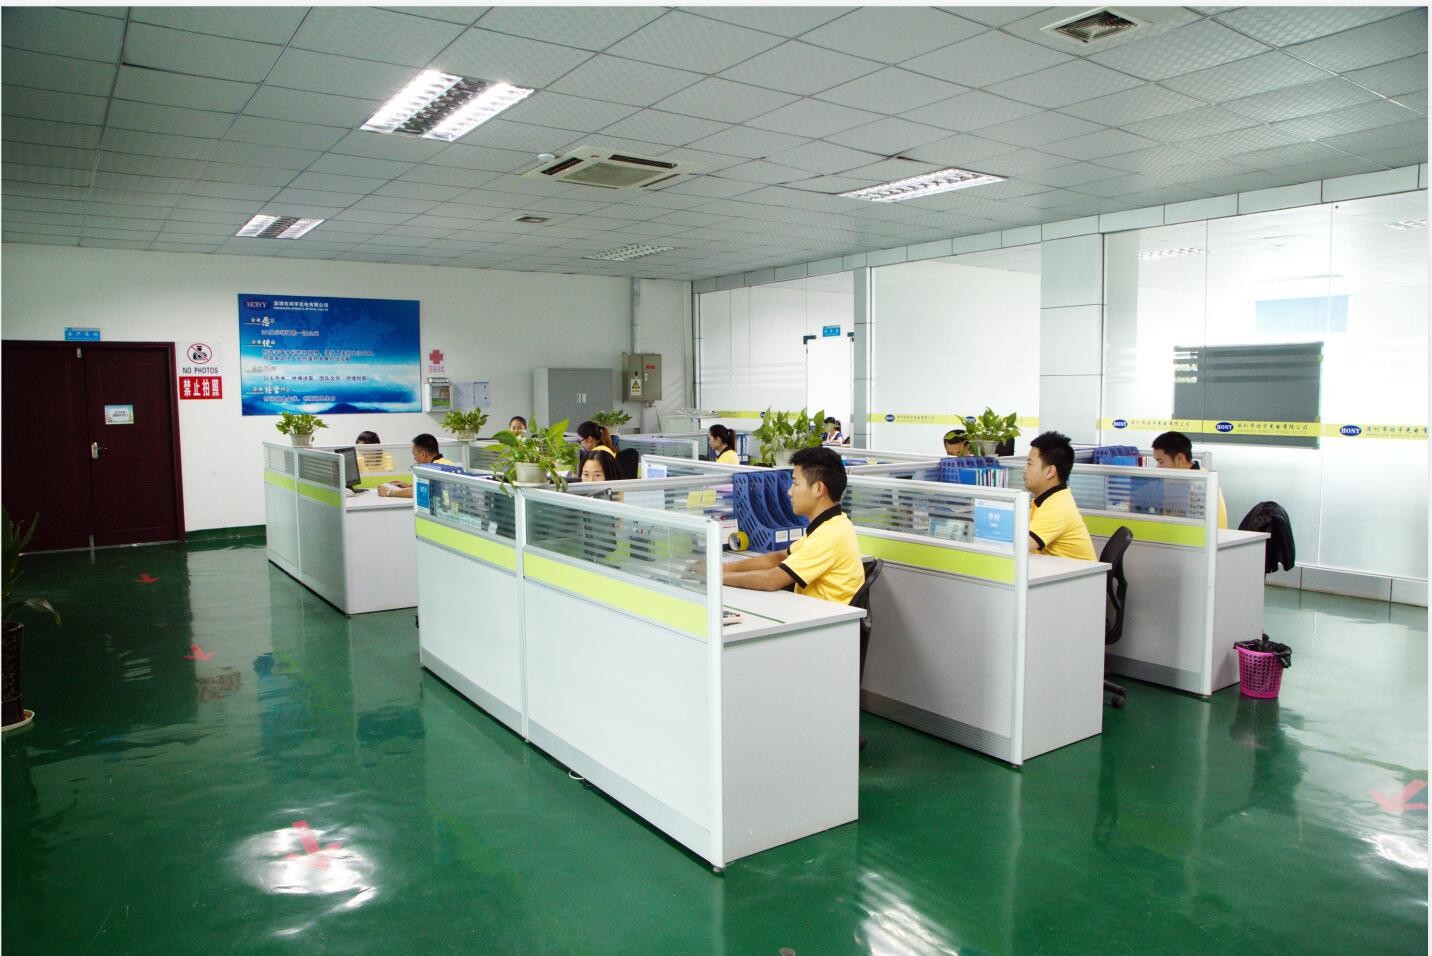 Çin Shenzhen HONY Optical Co., Limited şirket Profili